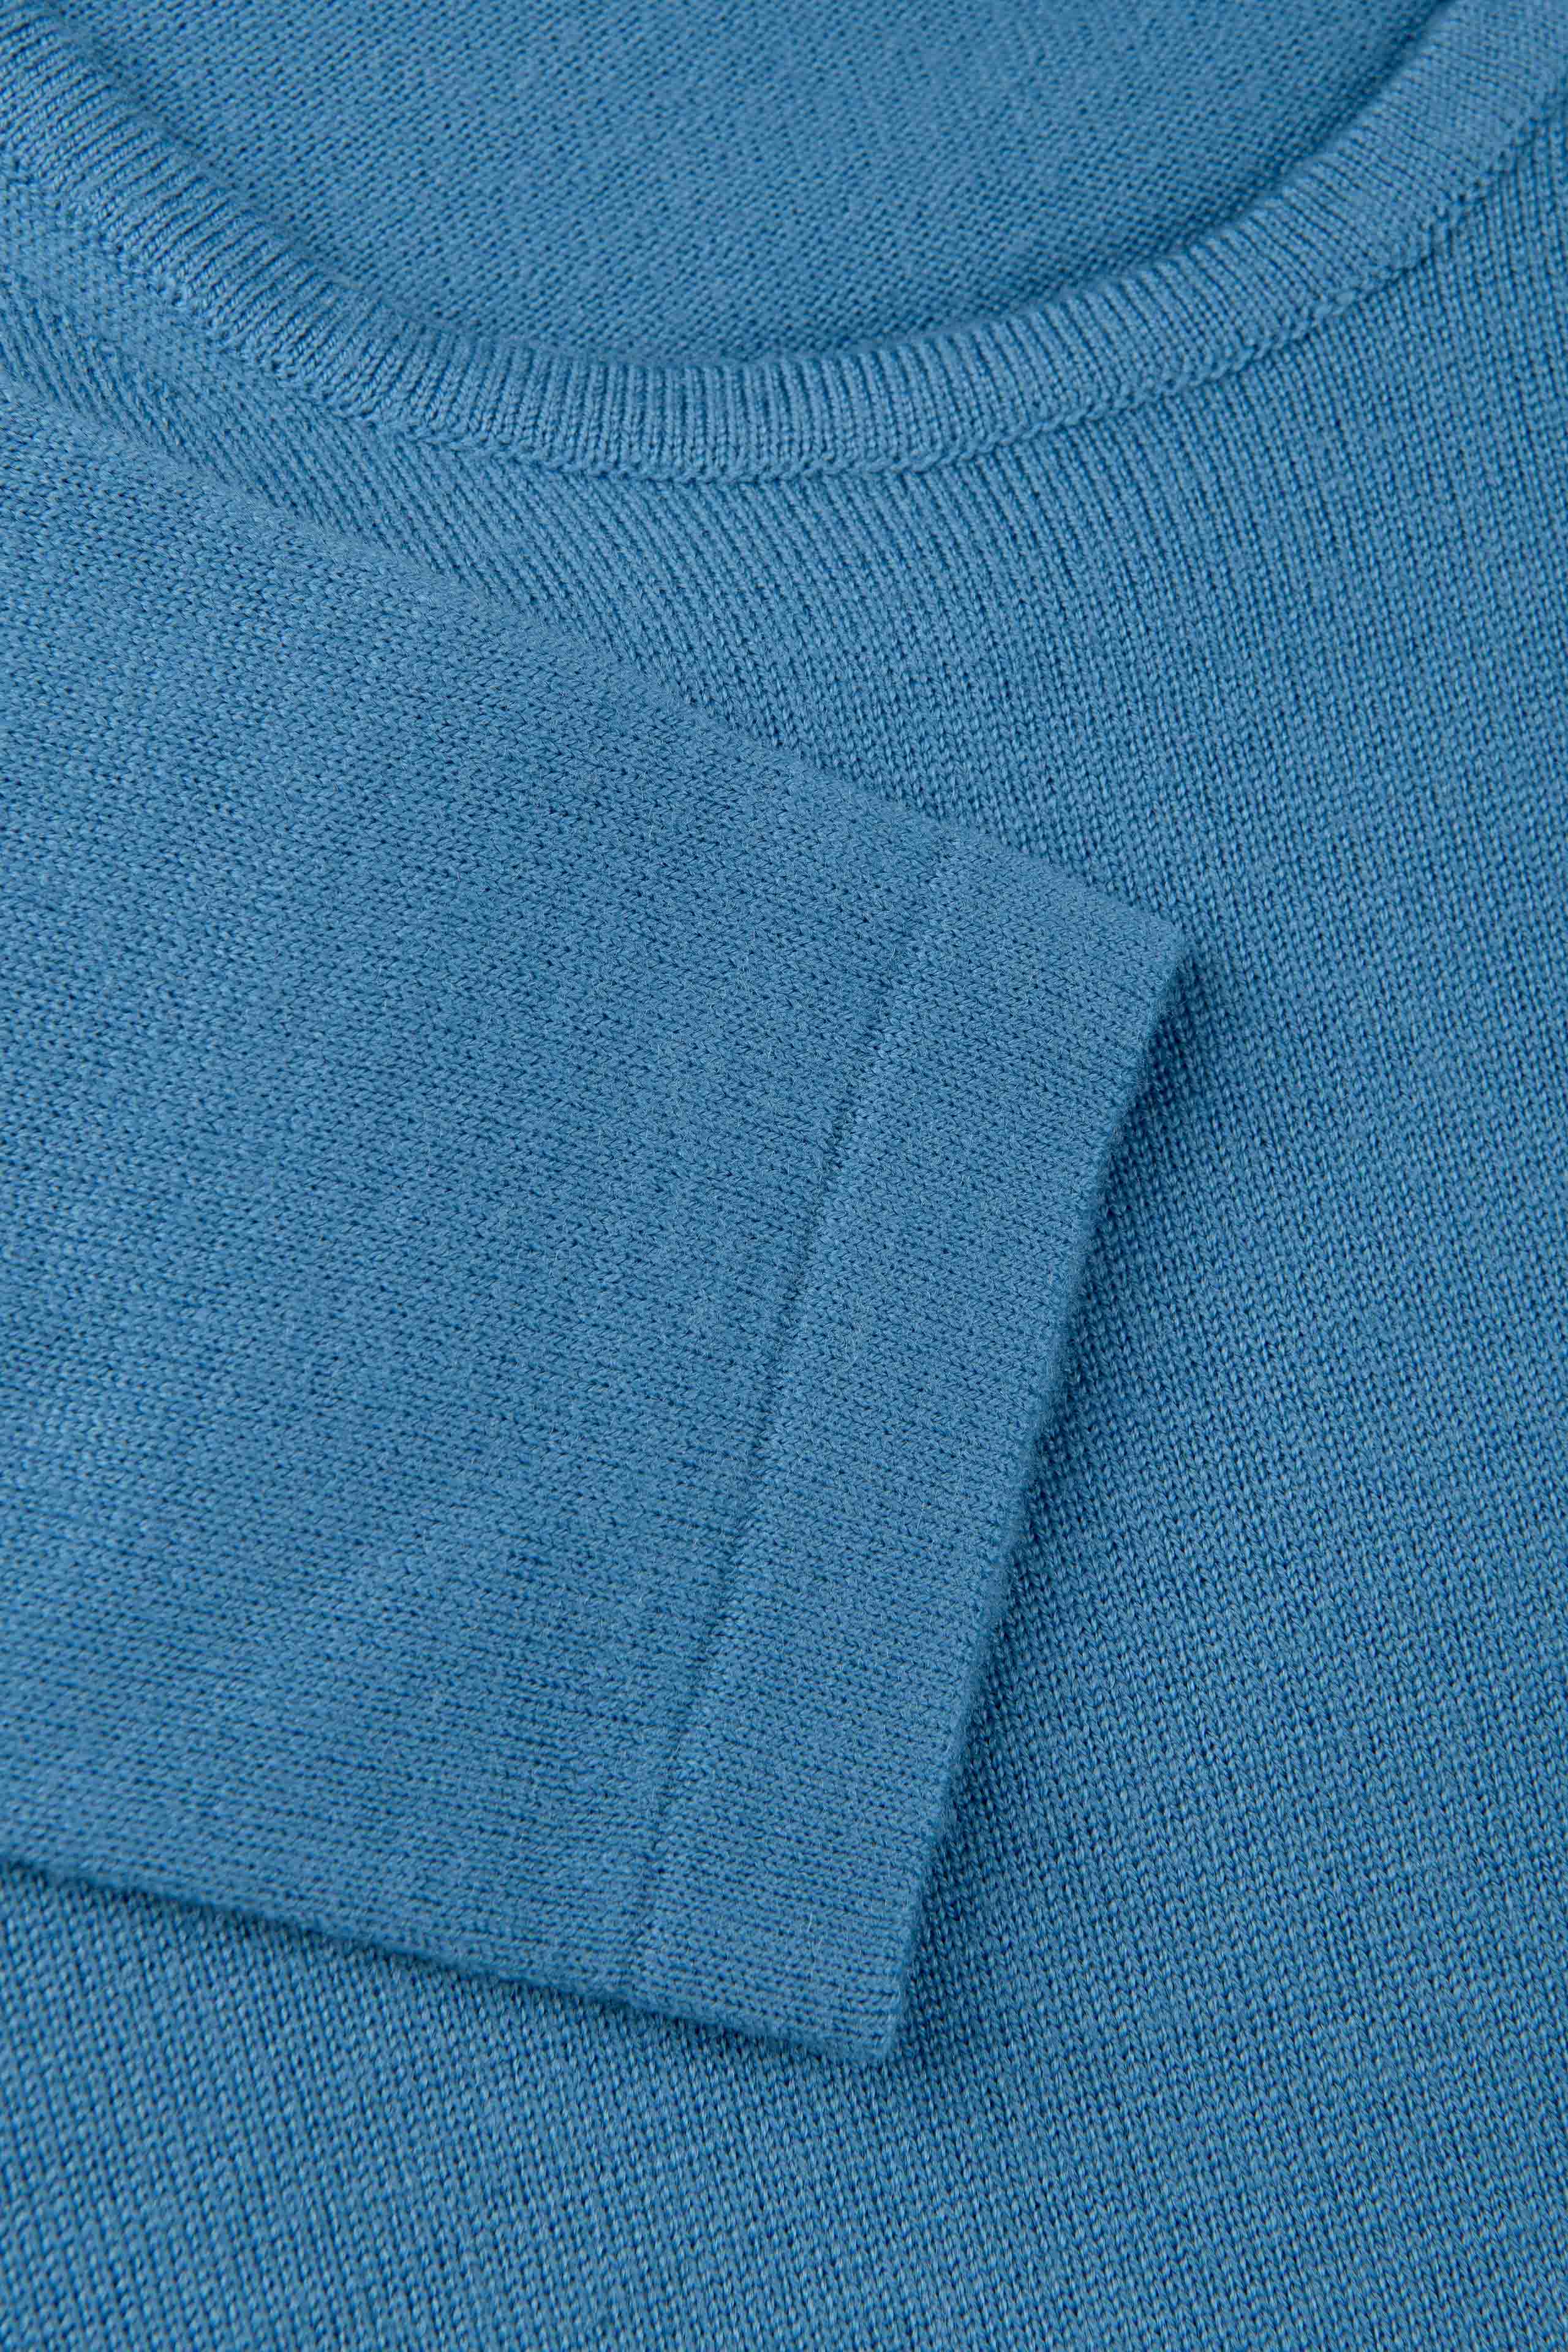 Merino wool crewneck sweater - Arctic blue